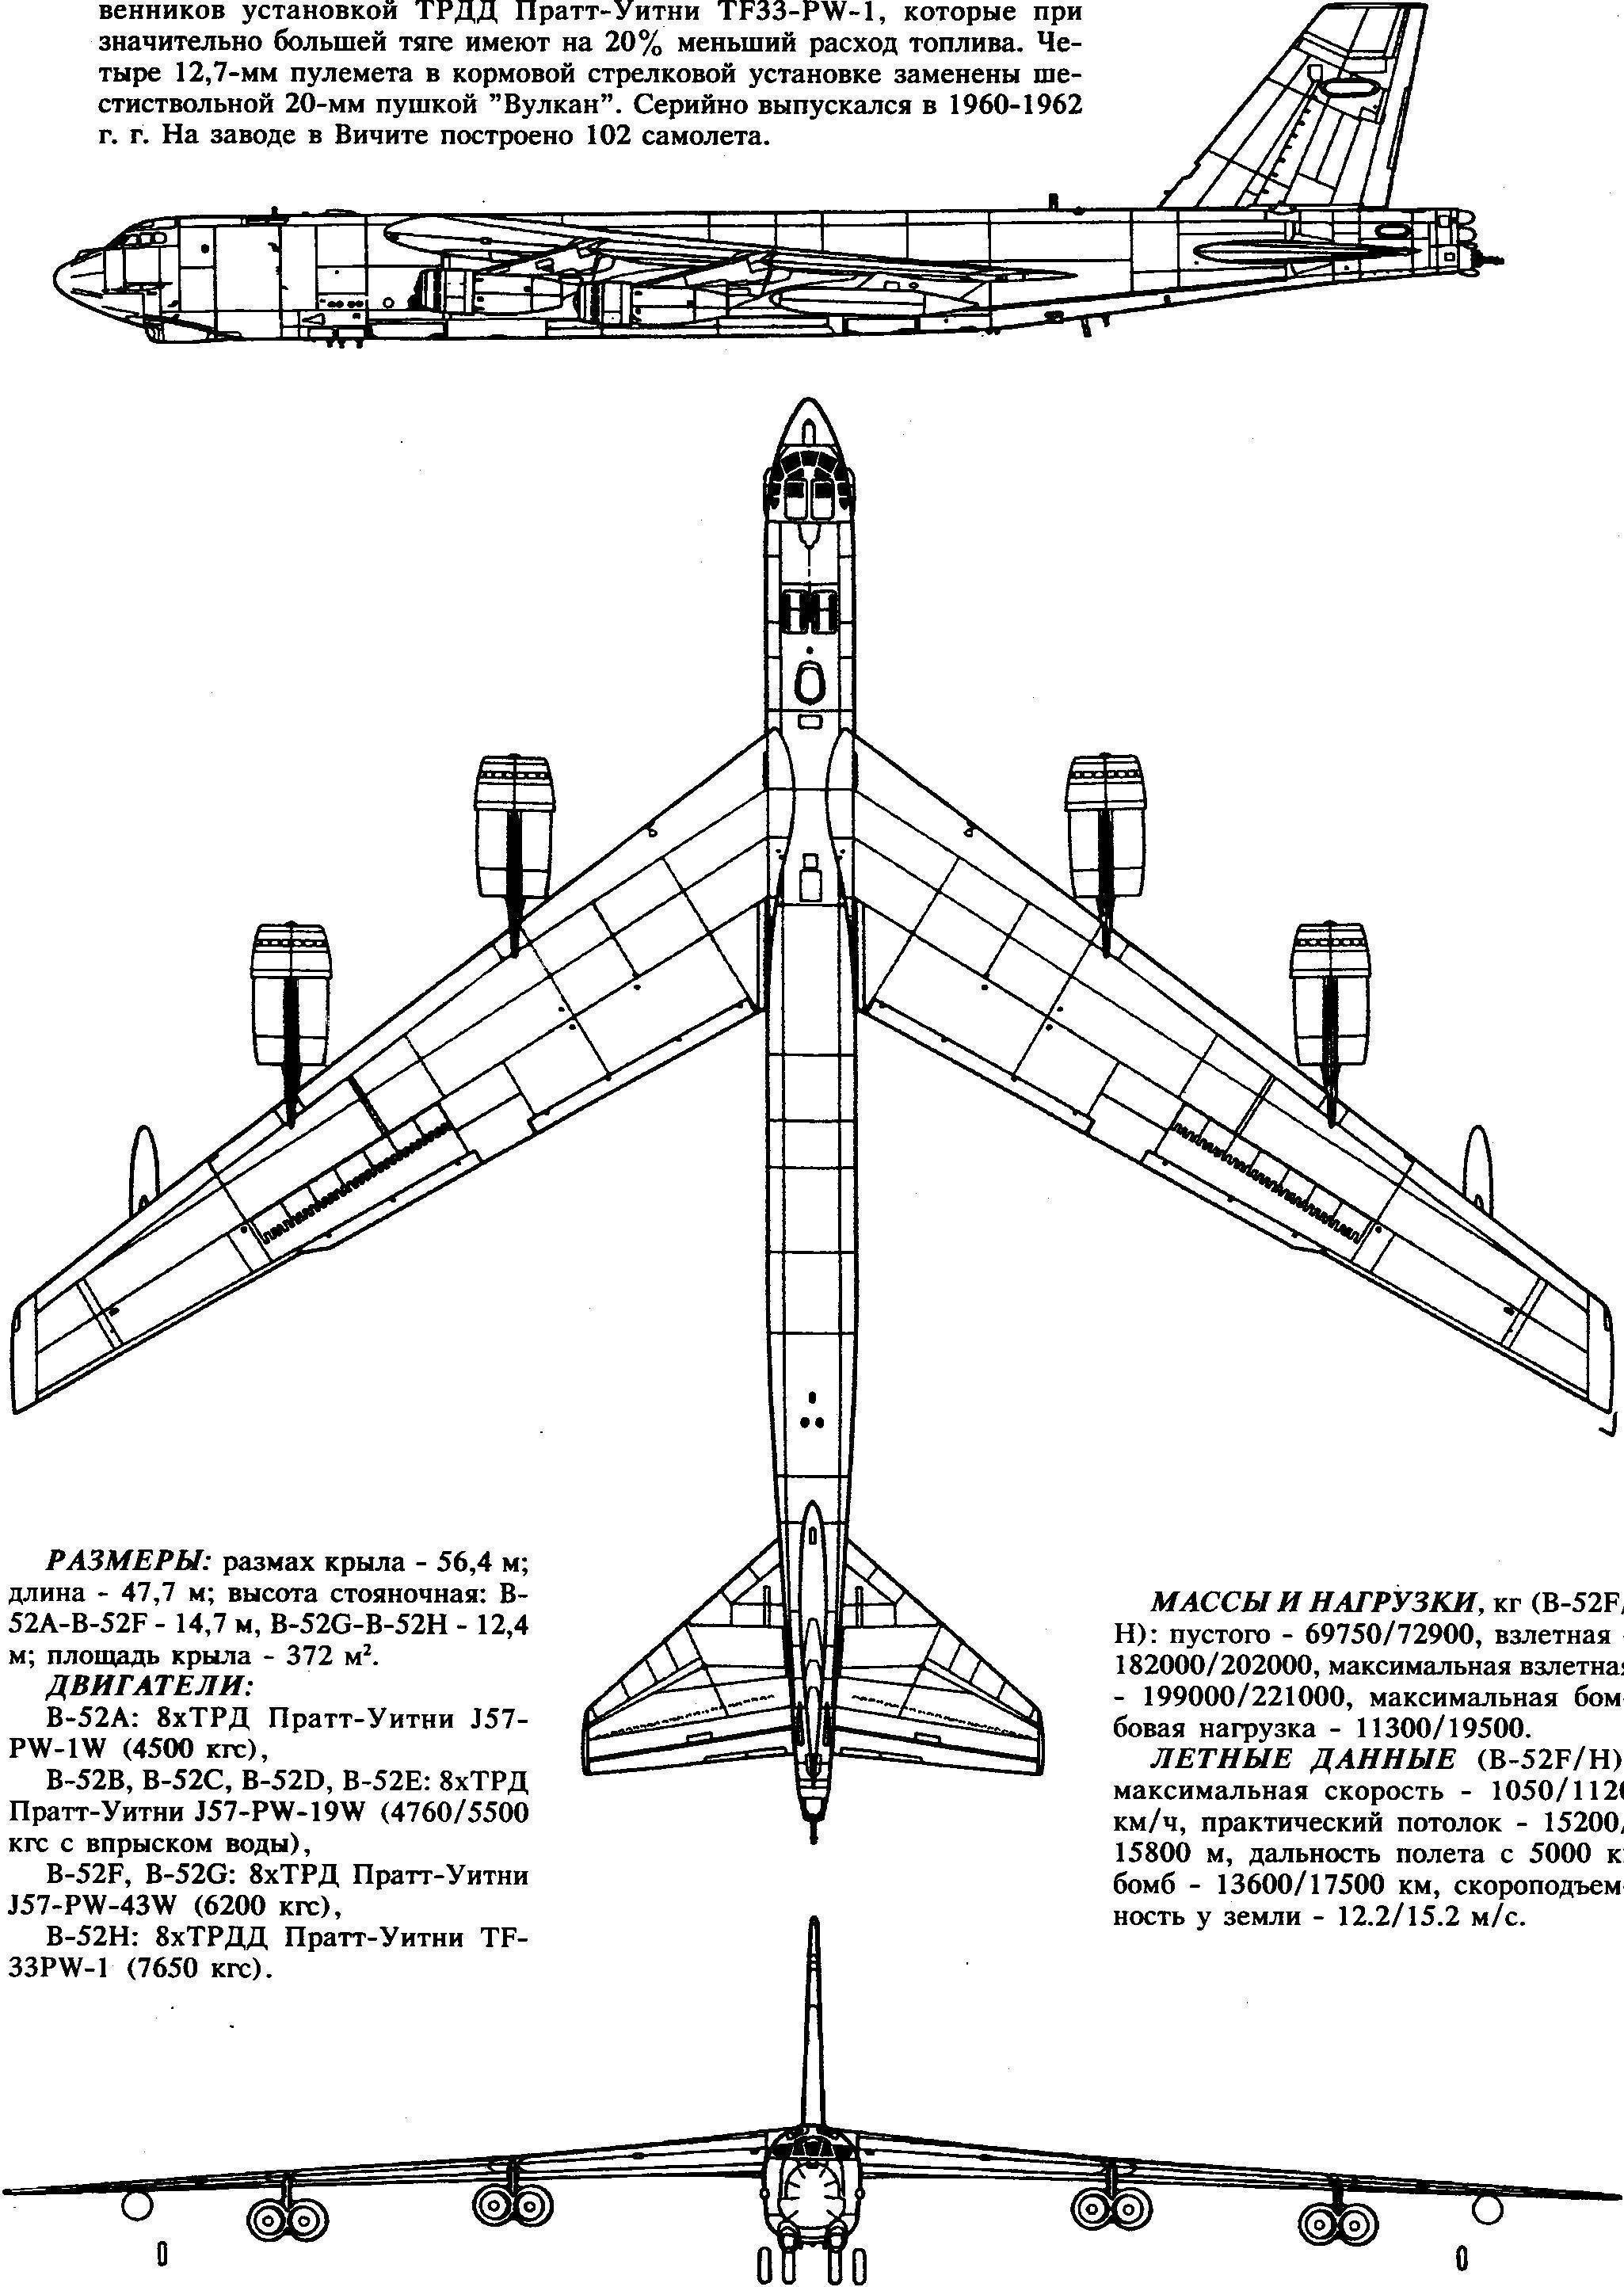 Стратегический бомбардировщик - strategic bomber - qwe.wiki